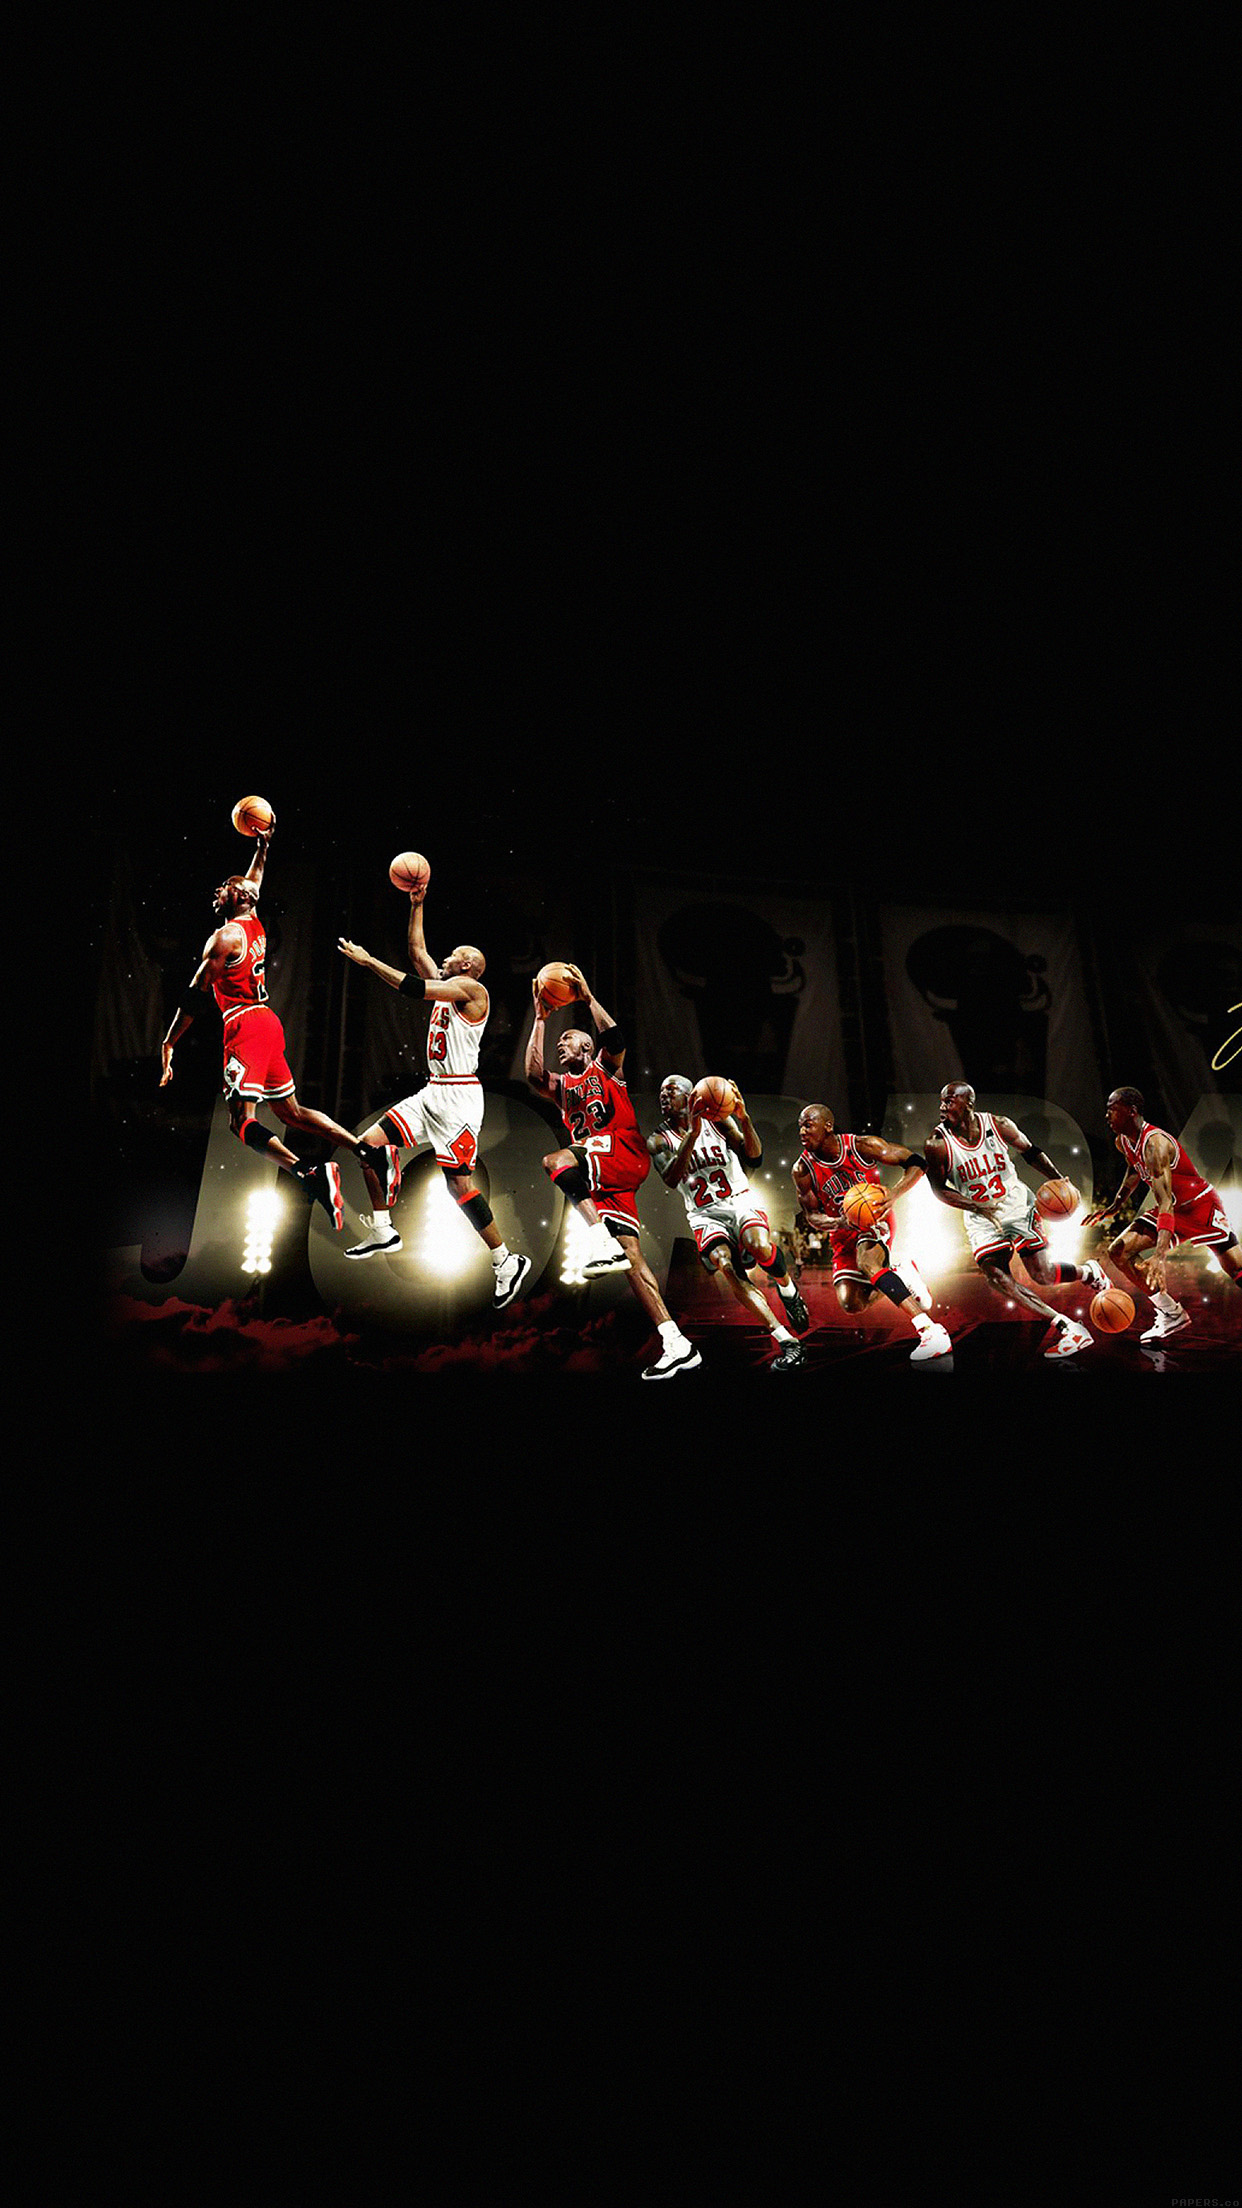 Michael Jordan Wallpaper Hd - HD Wallpaper 